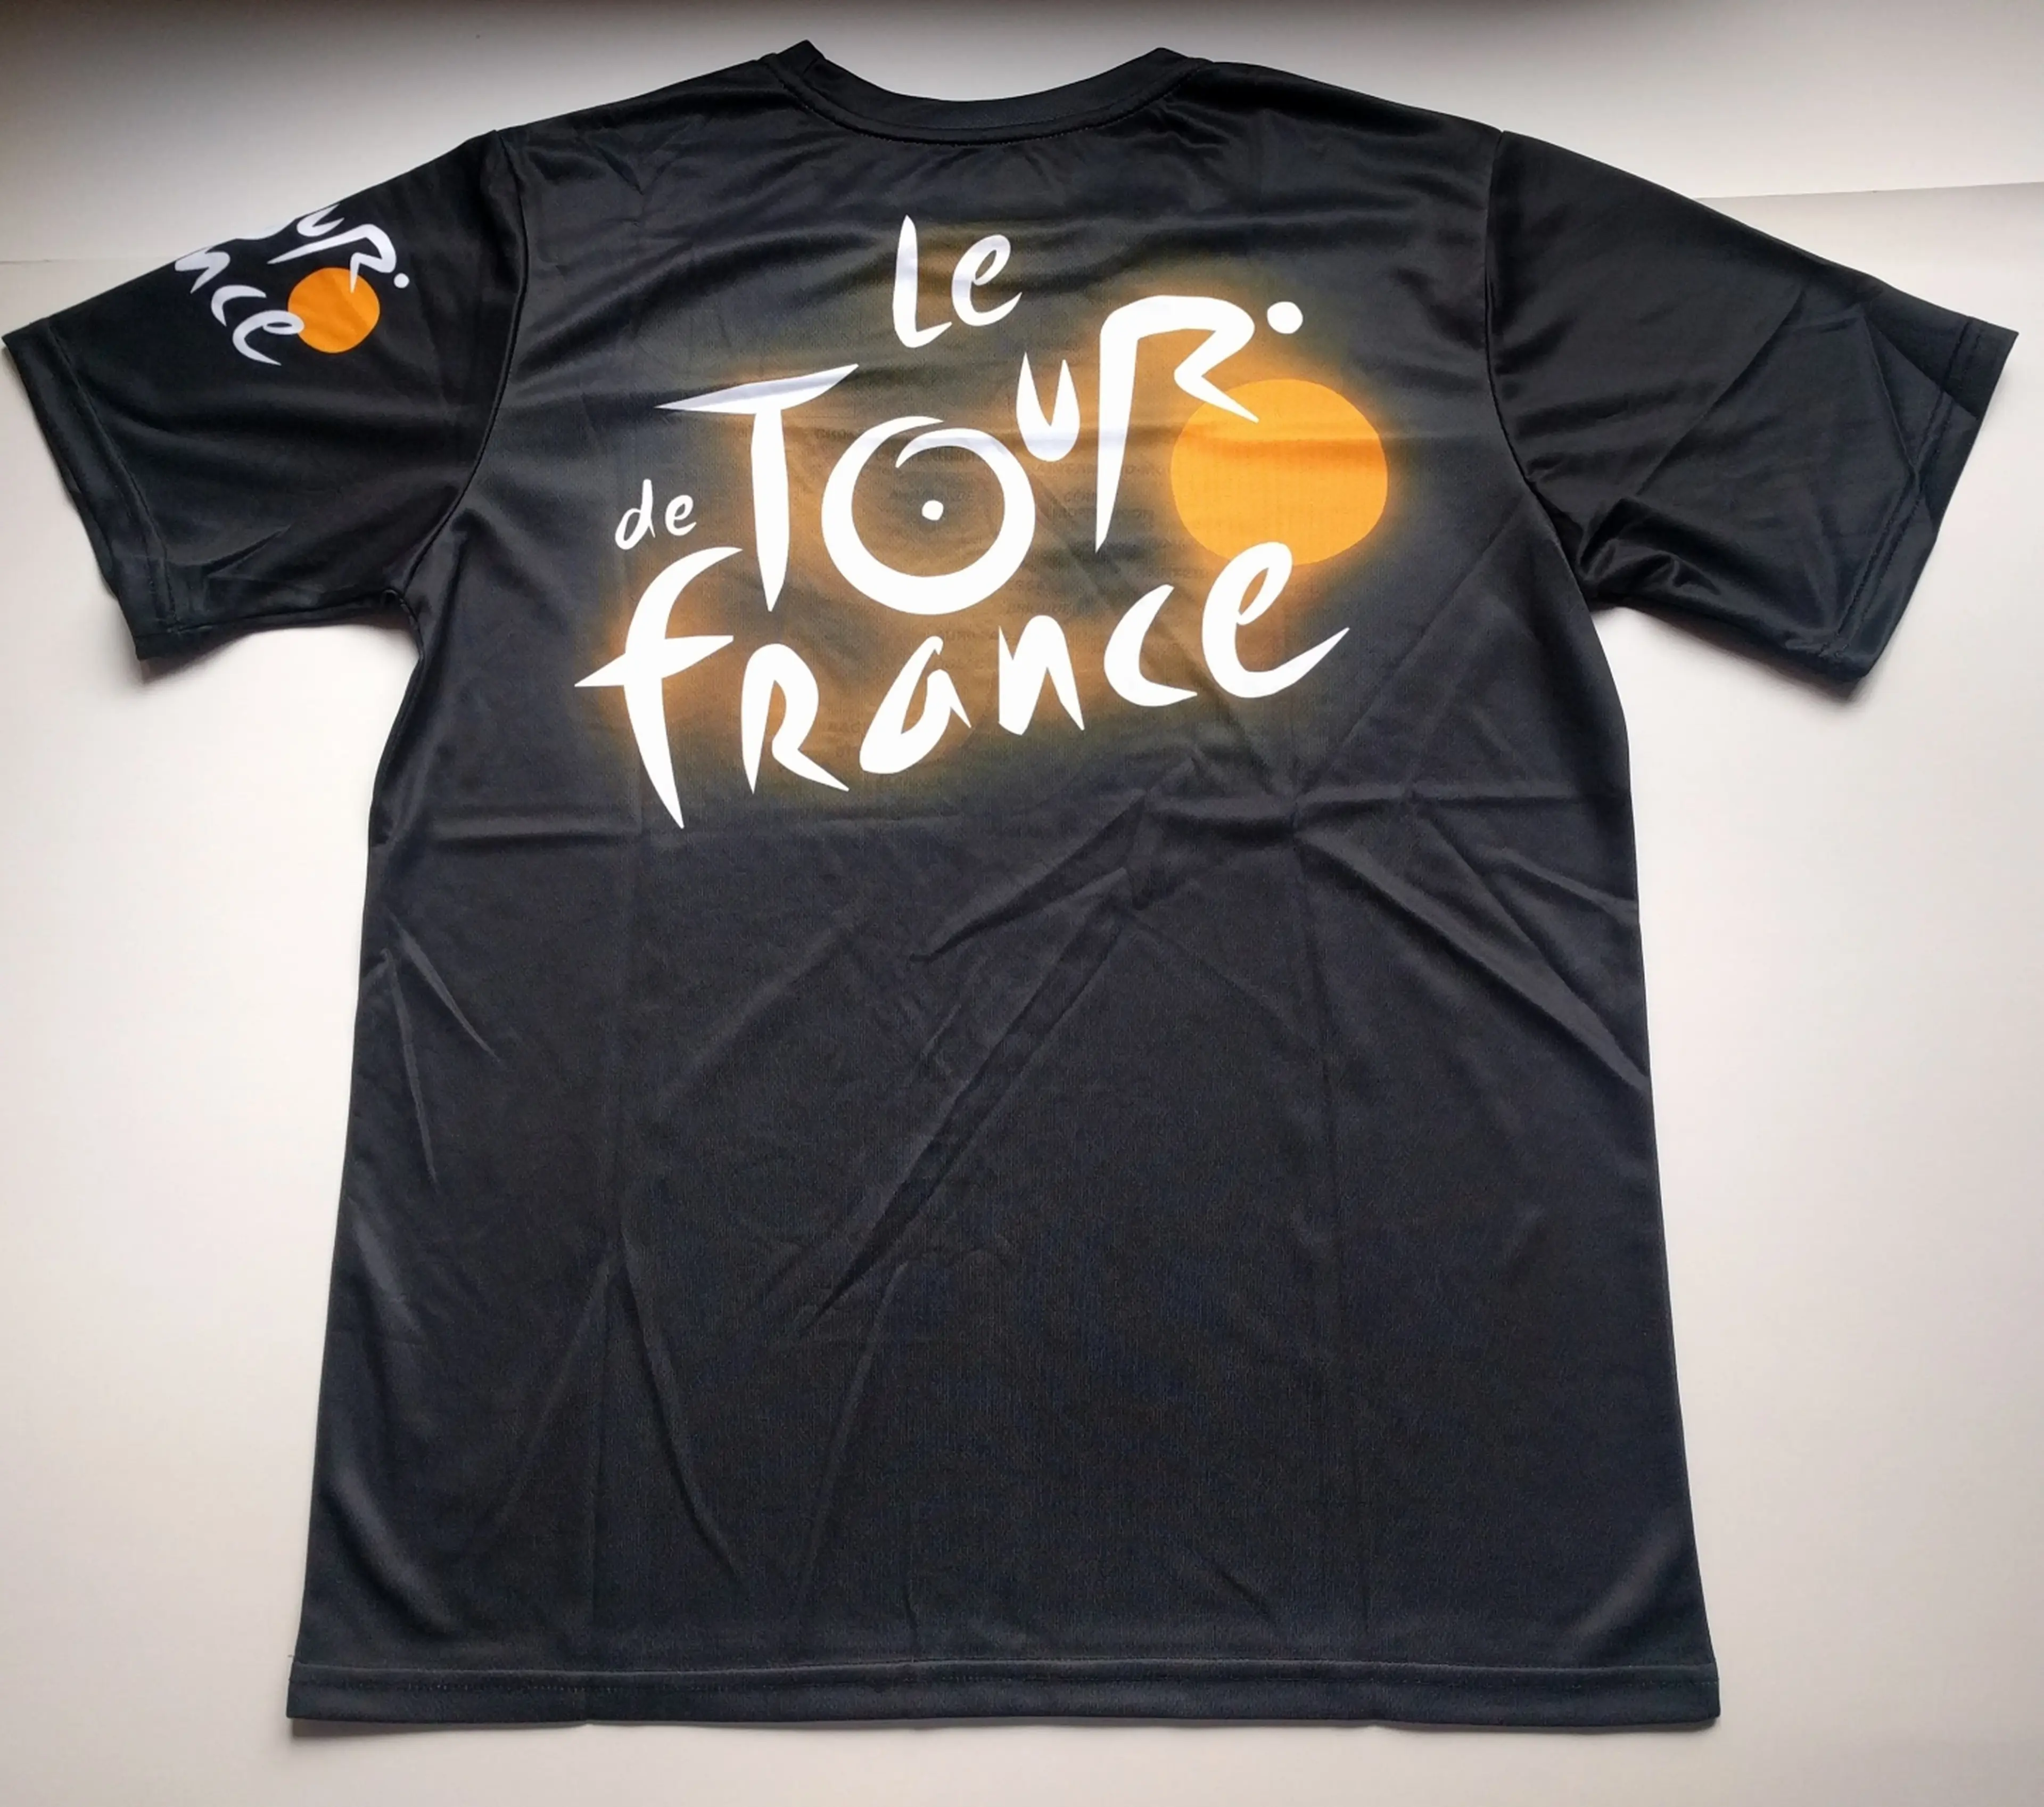 2. Tricou Tour de France t4 replica